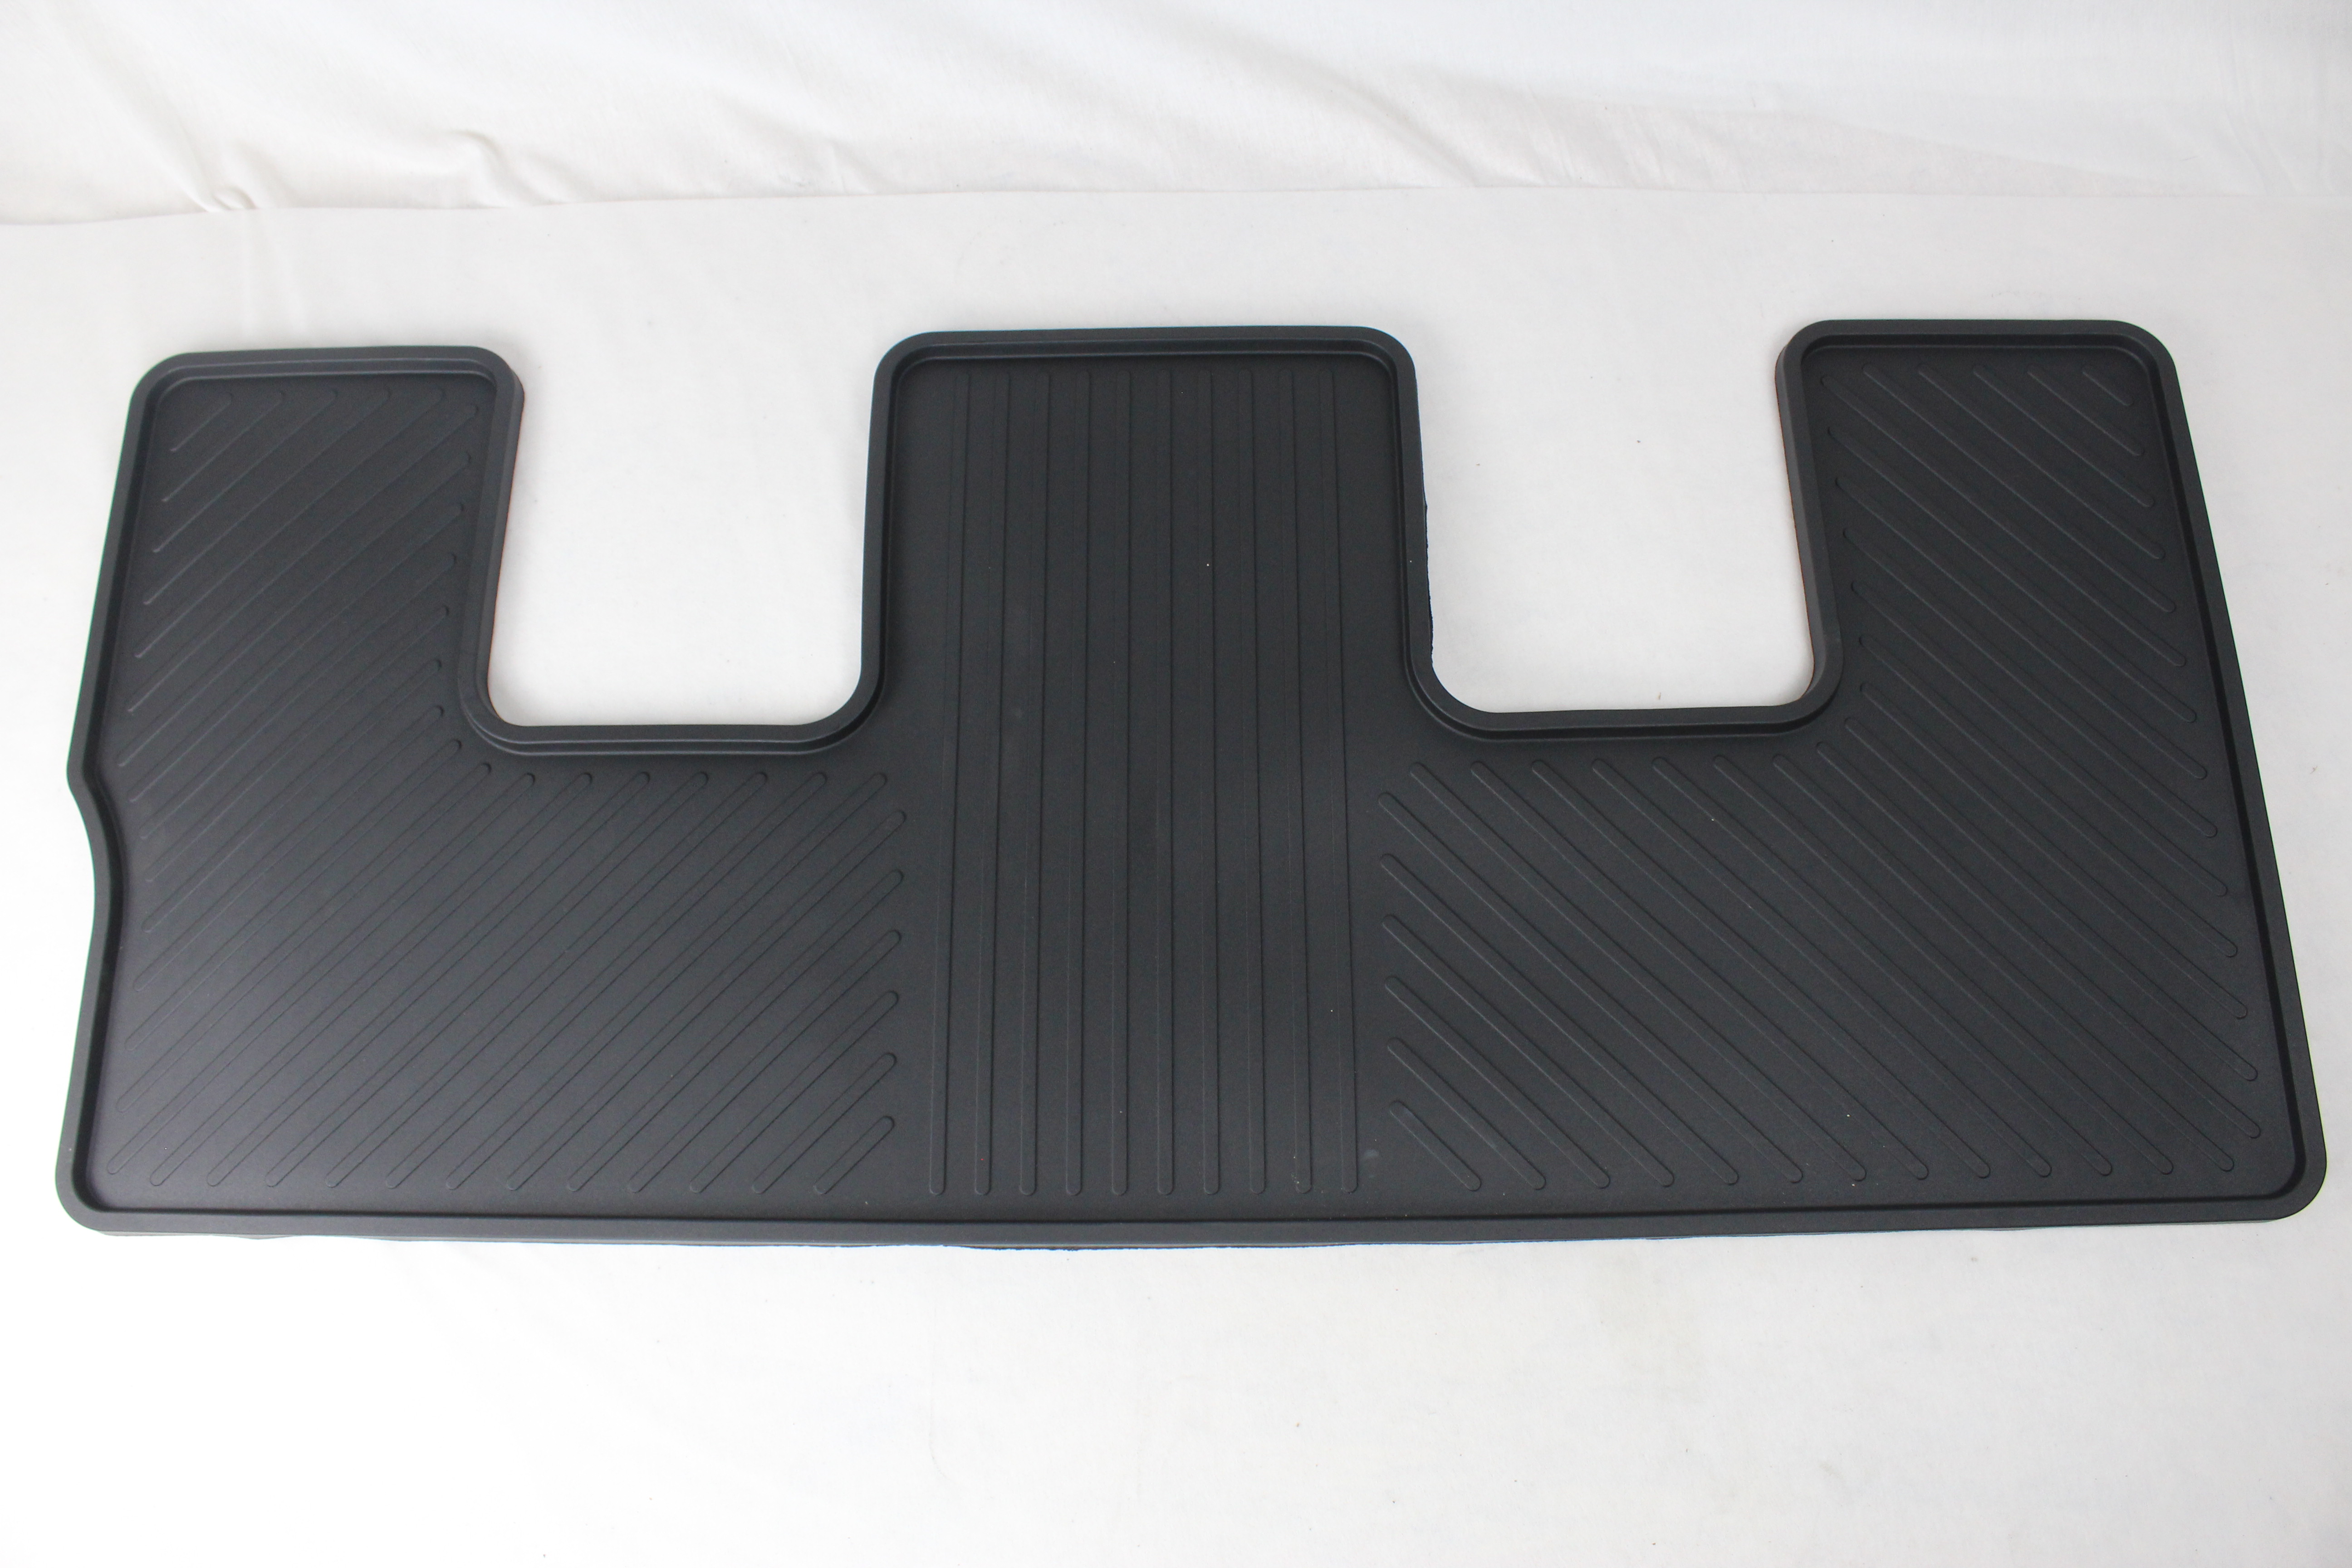 Fußmatte hinten 3. Sitzreihe Gummi Ford Galaxy - S-Max | KFZ-Teileprofi